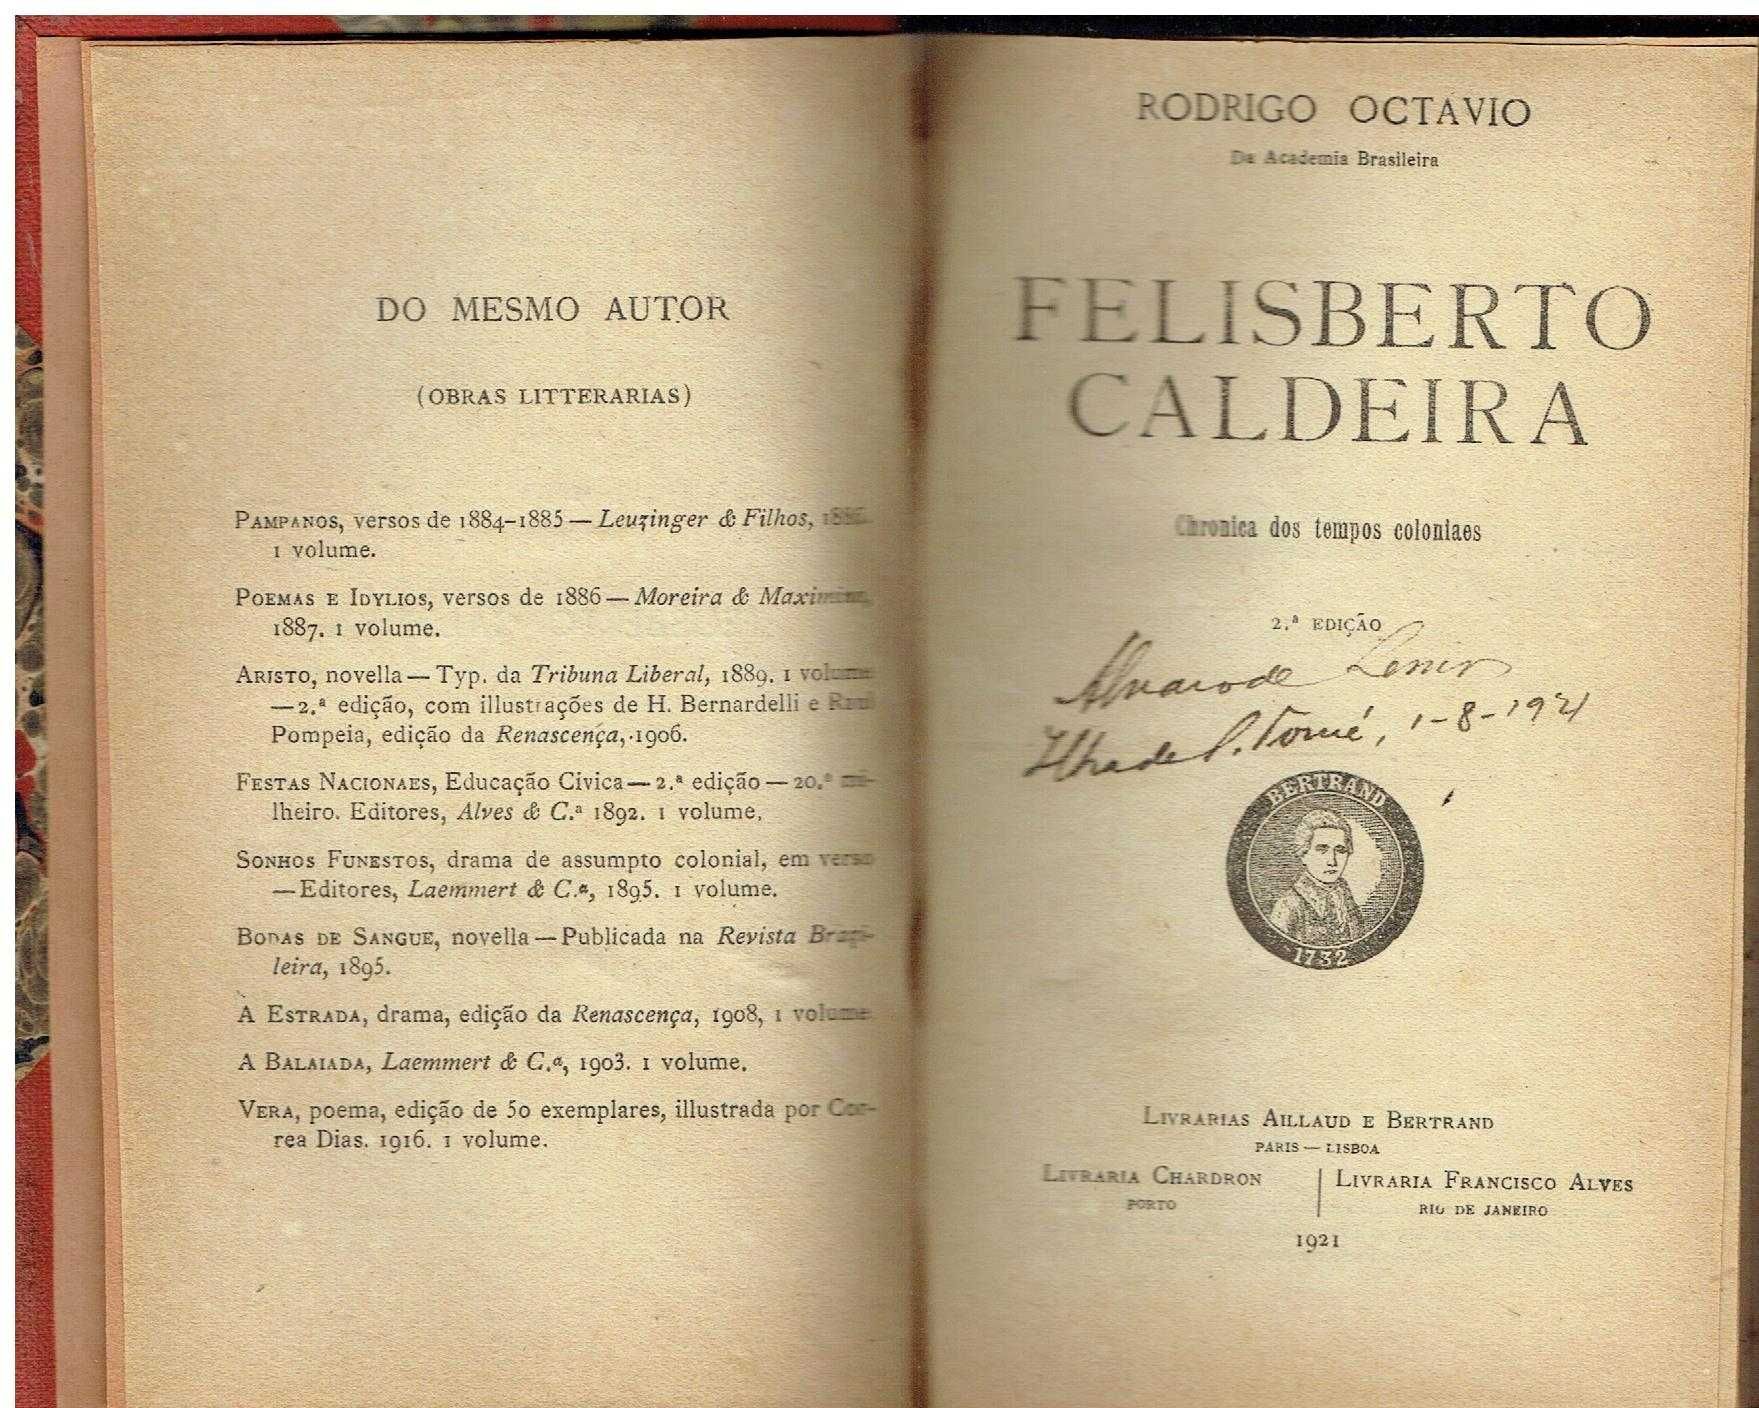 7286

Felisberto Caldeira 
de Rodrigo Octávio